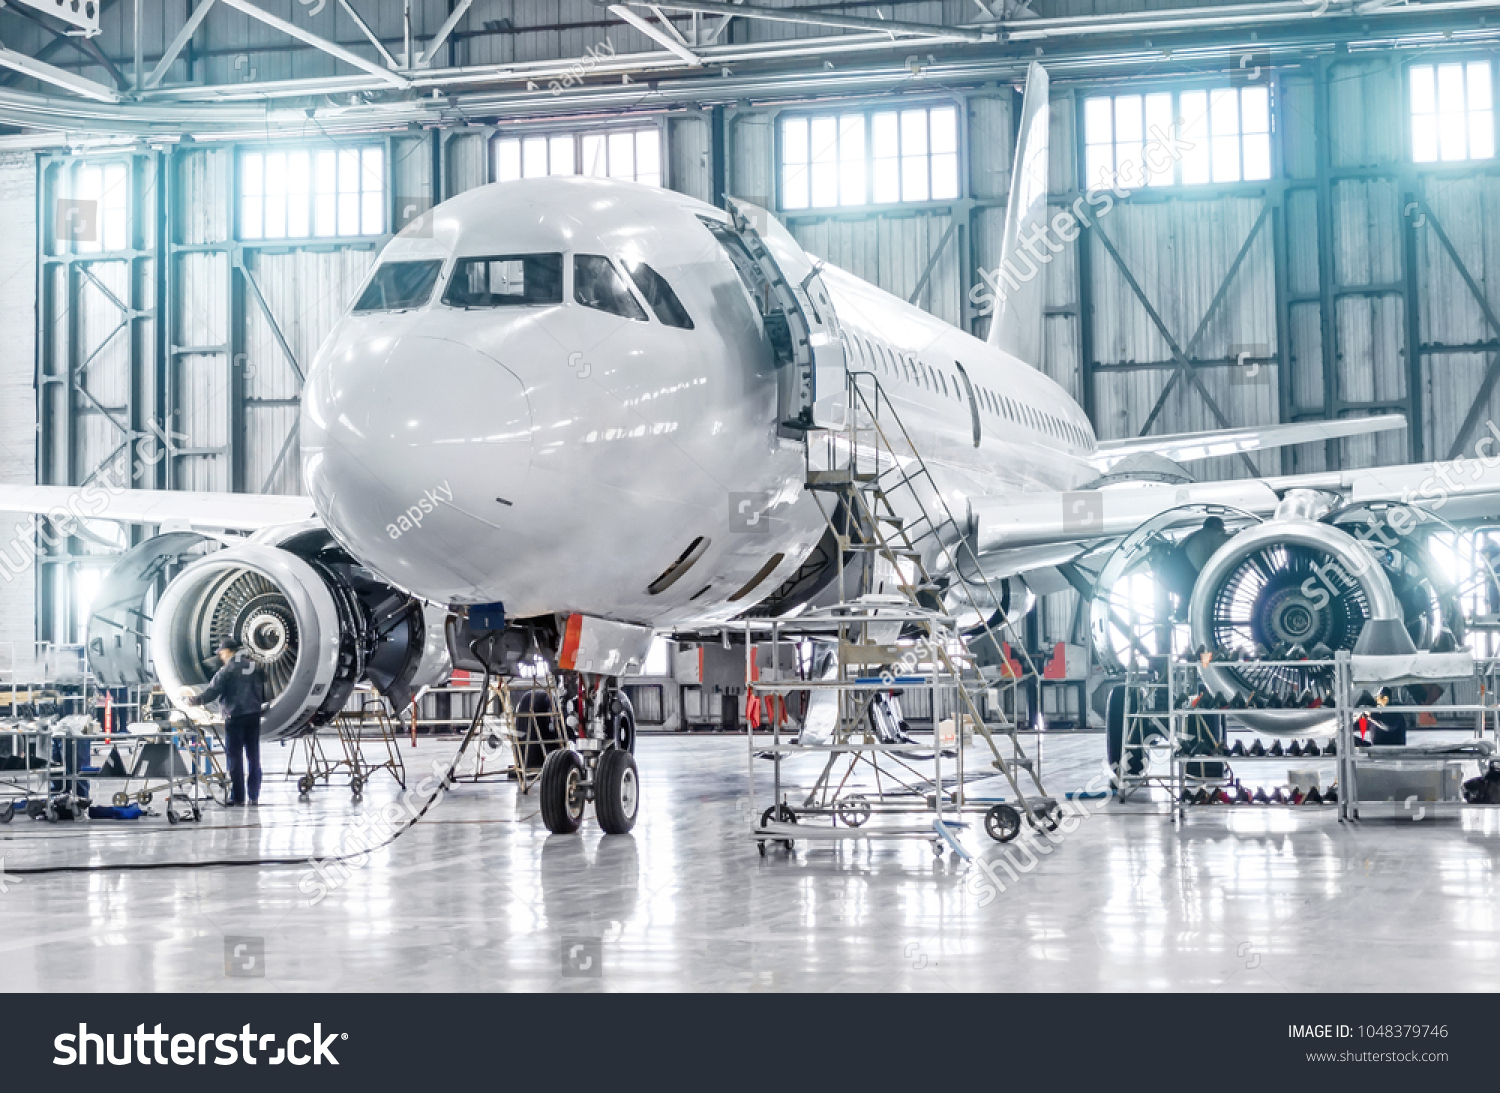 Passenger aircraft on maintenance of engine and fuselage repair in airport hangar #1048379746